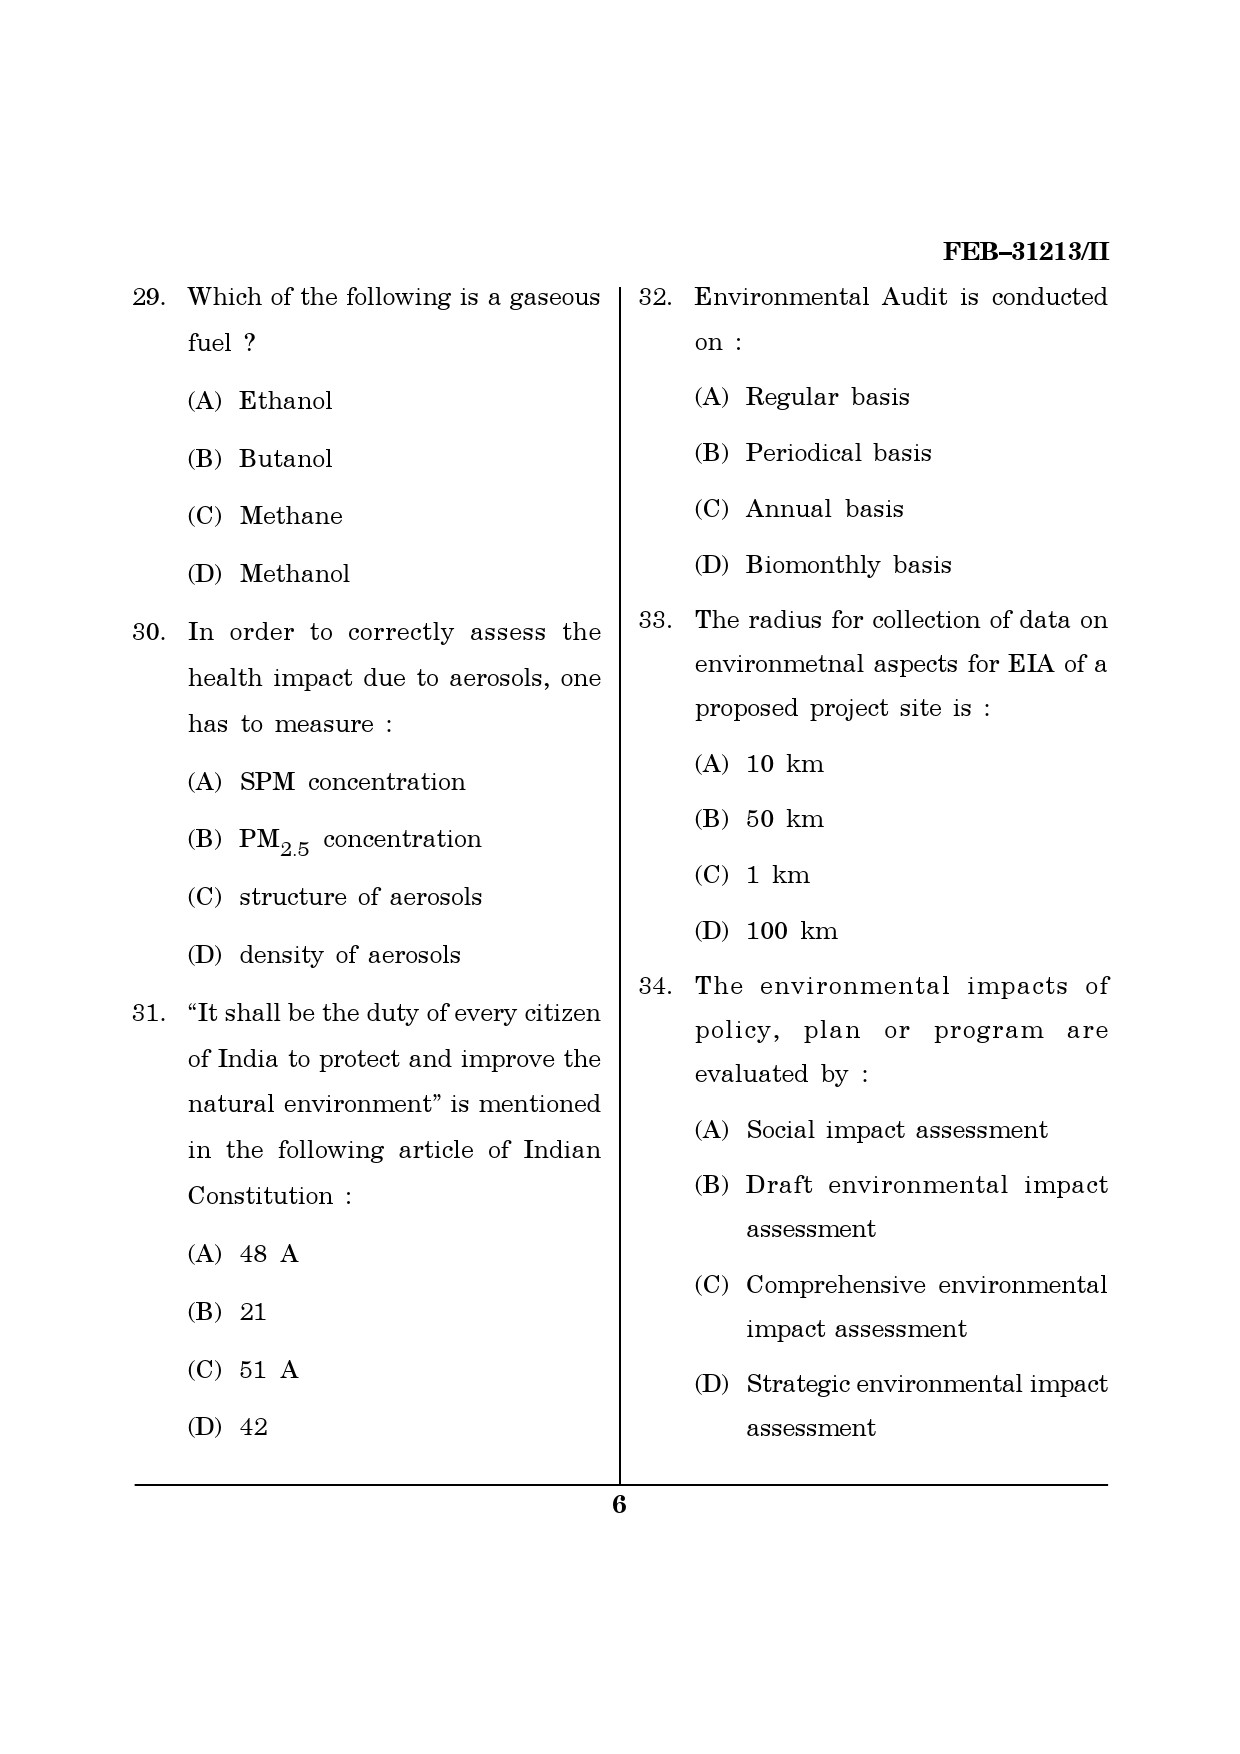 Maharashtra SET Environmental Sciences Question Paper II February 2013 6